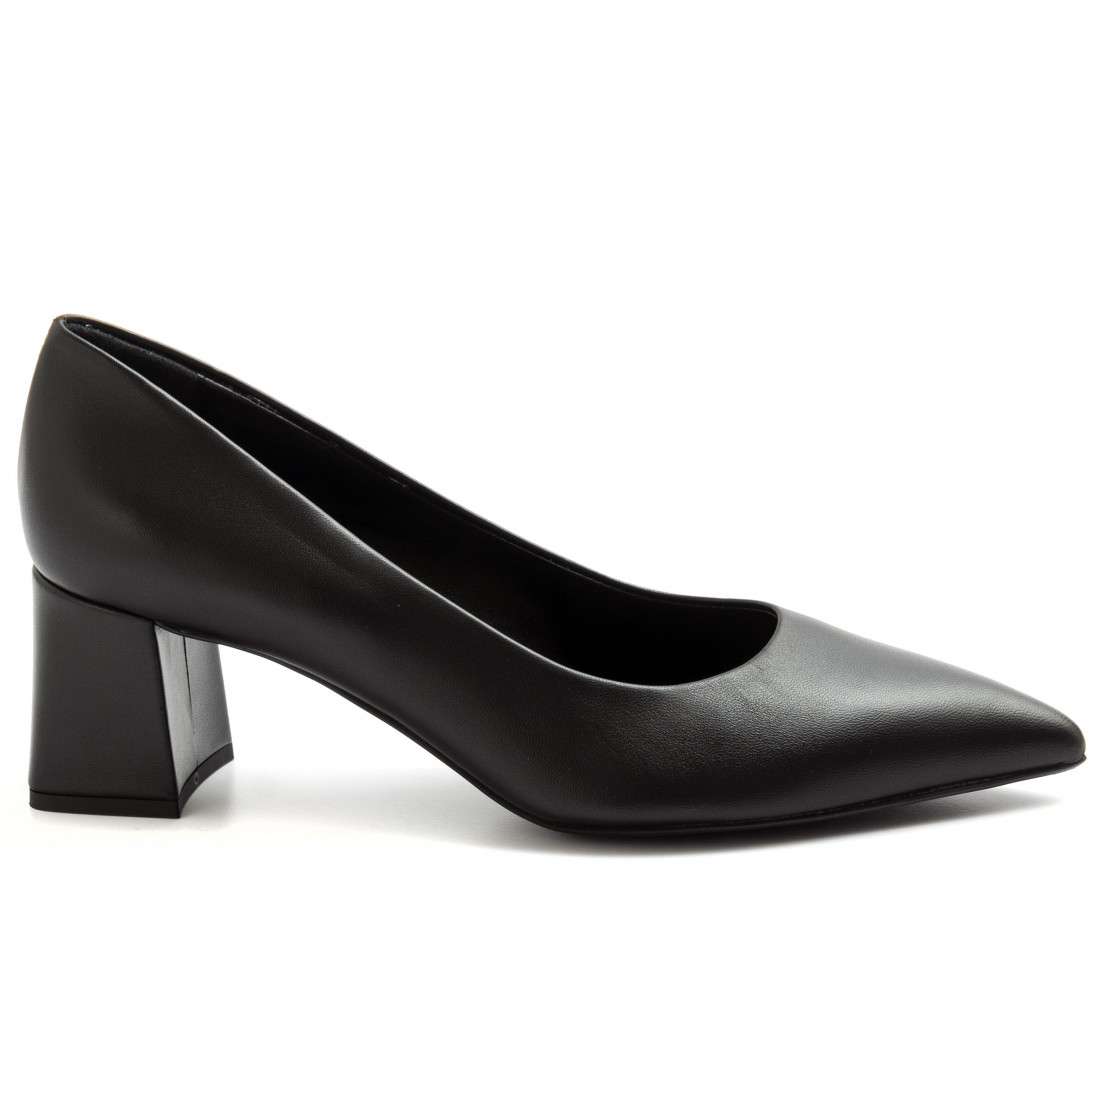 Silvia Rossini pump in black leather with medium heel